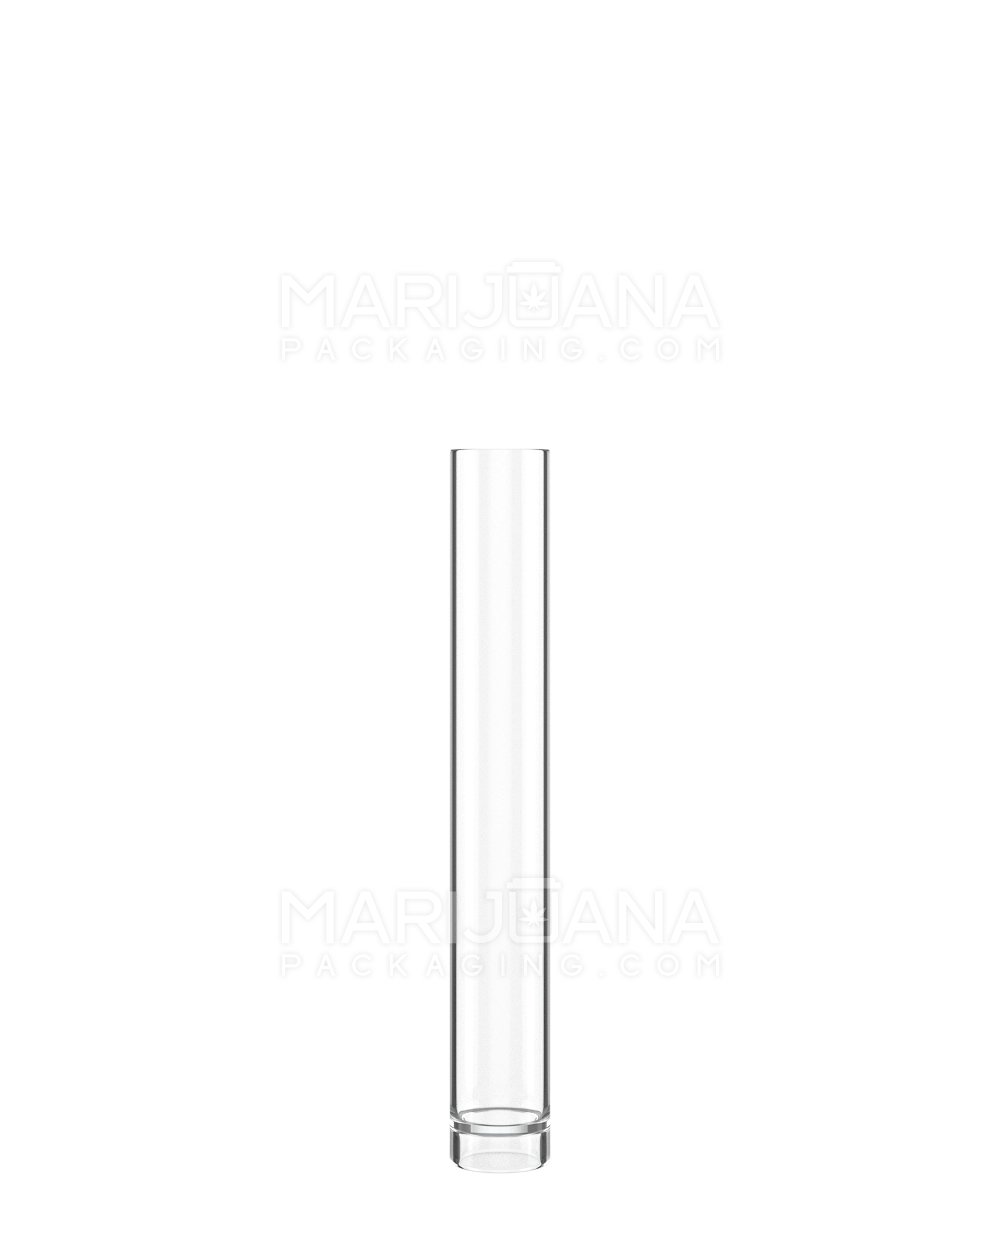 Buttonless Vape Cartridge Tube w/ Black Cap | 86mm - Clear Plastic - 500 Count - 2